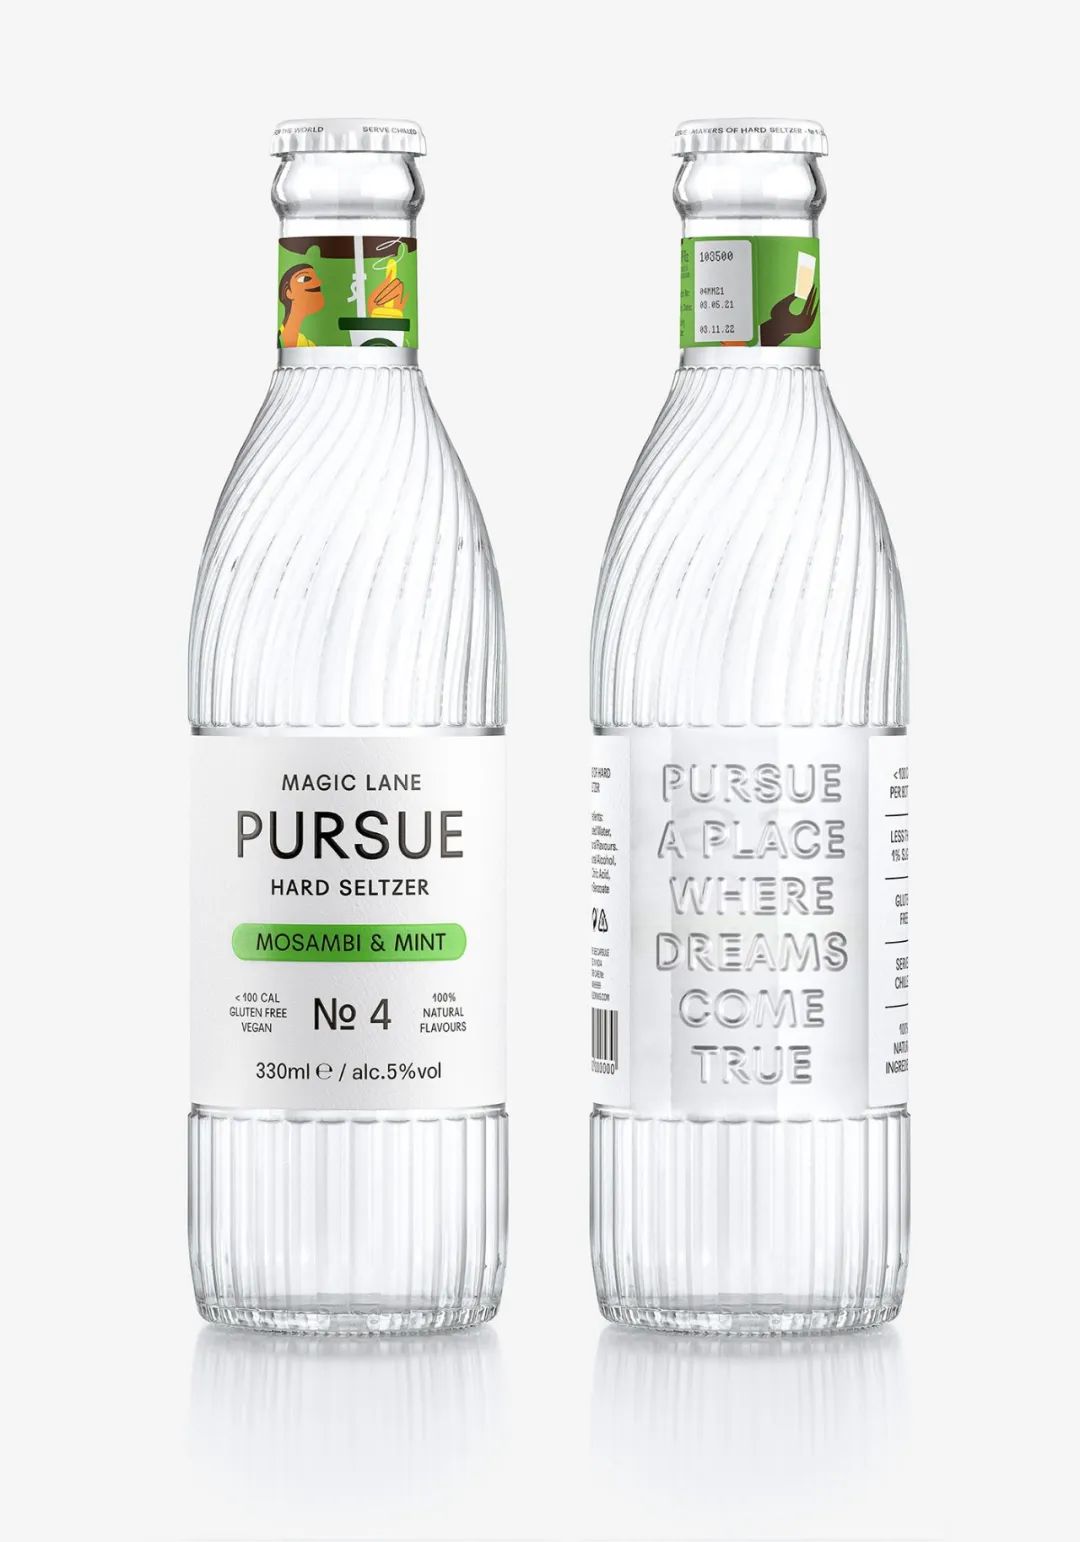 Pursue Hard Seltzer饮料品牌包装设计